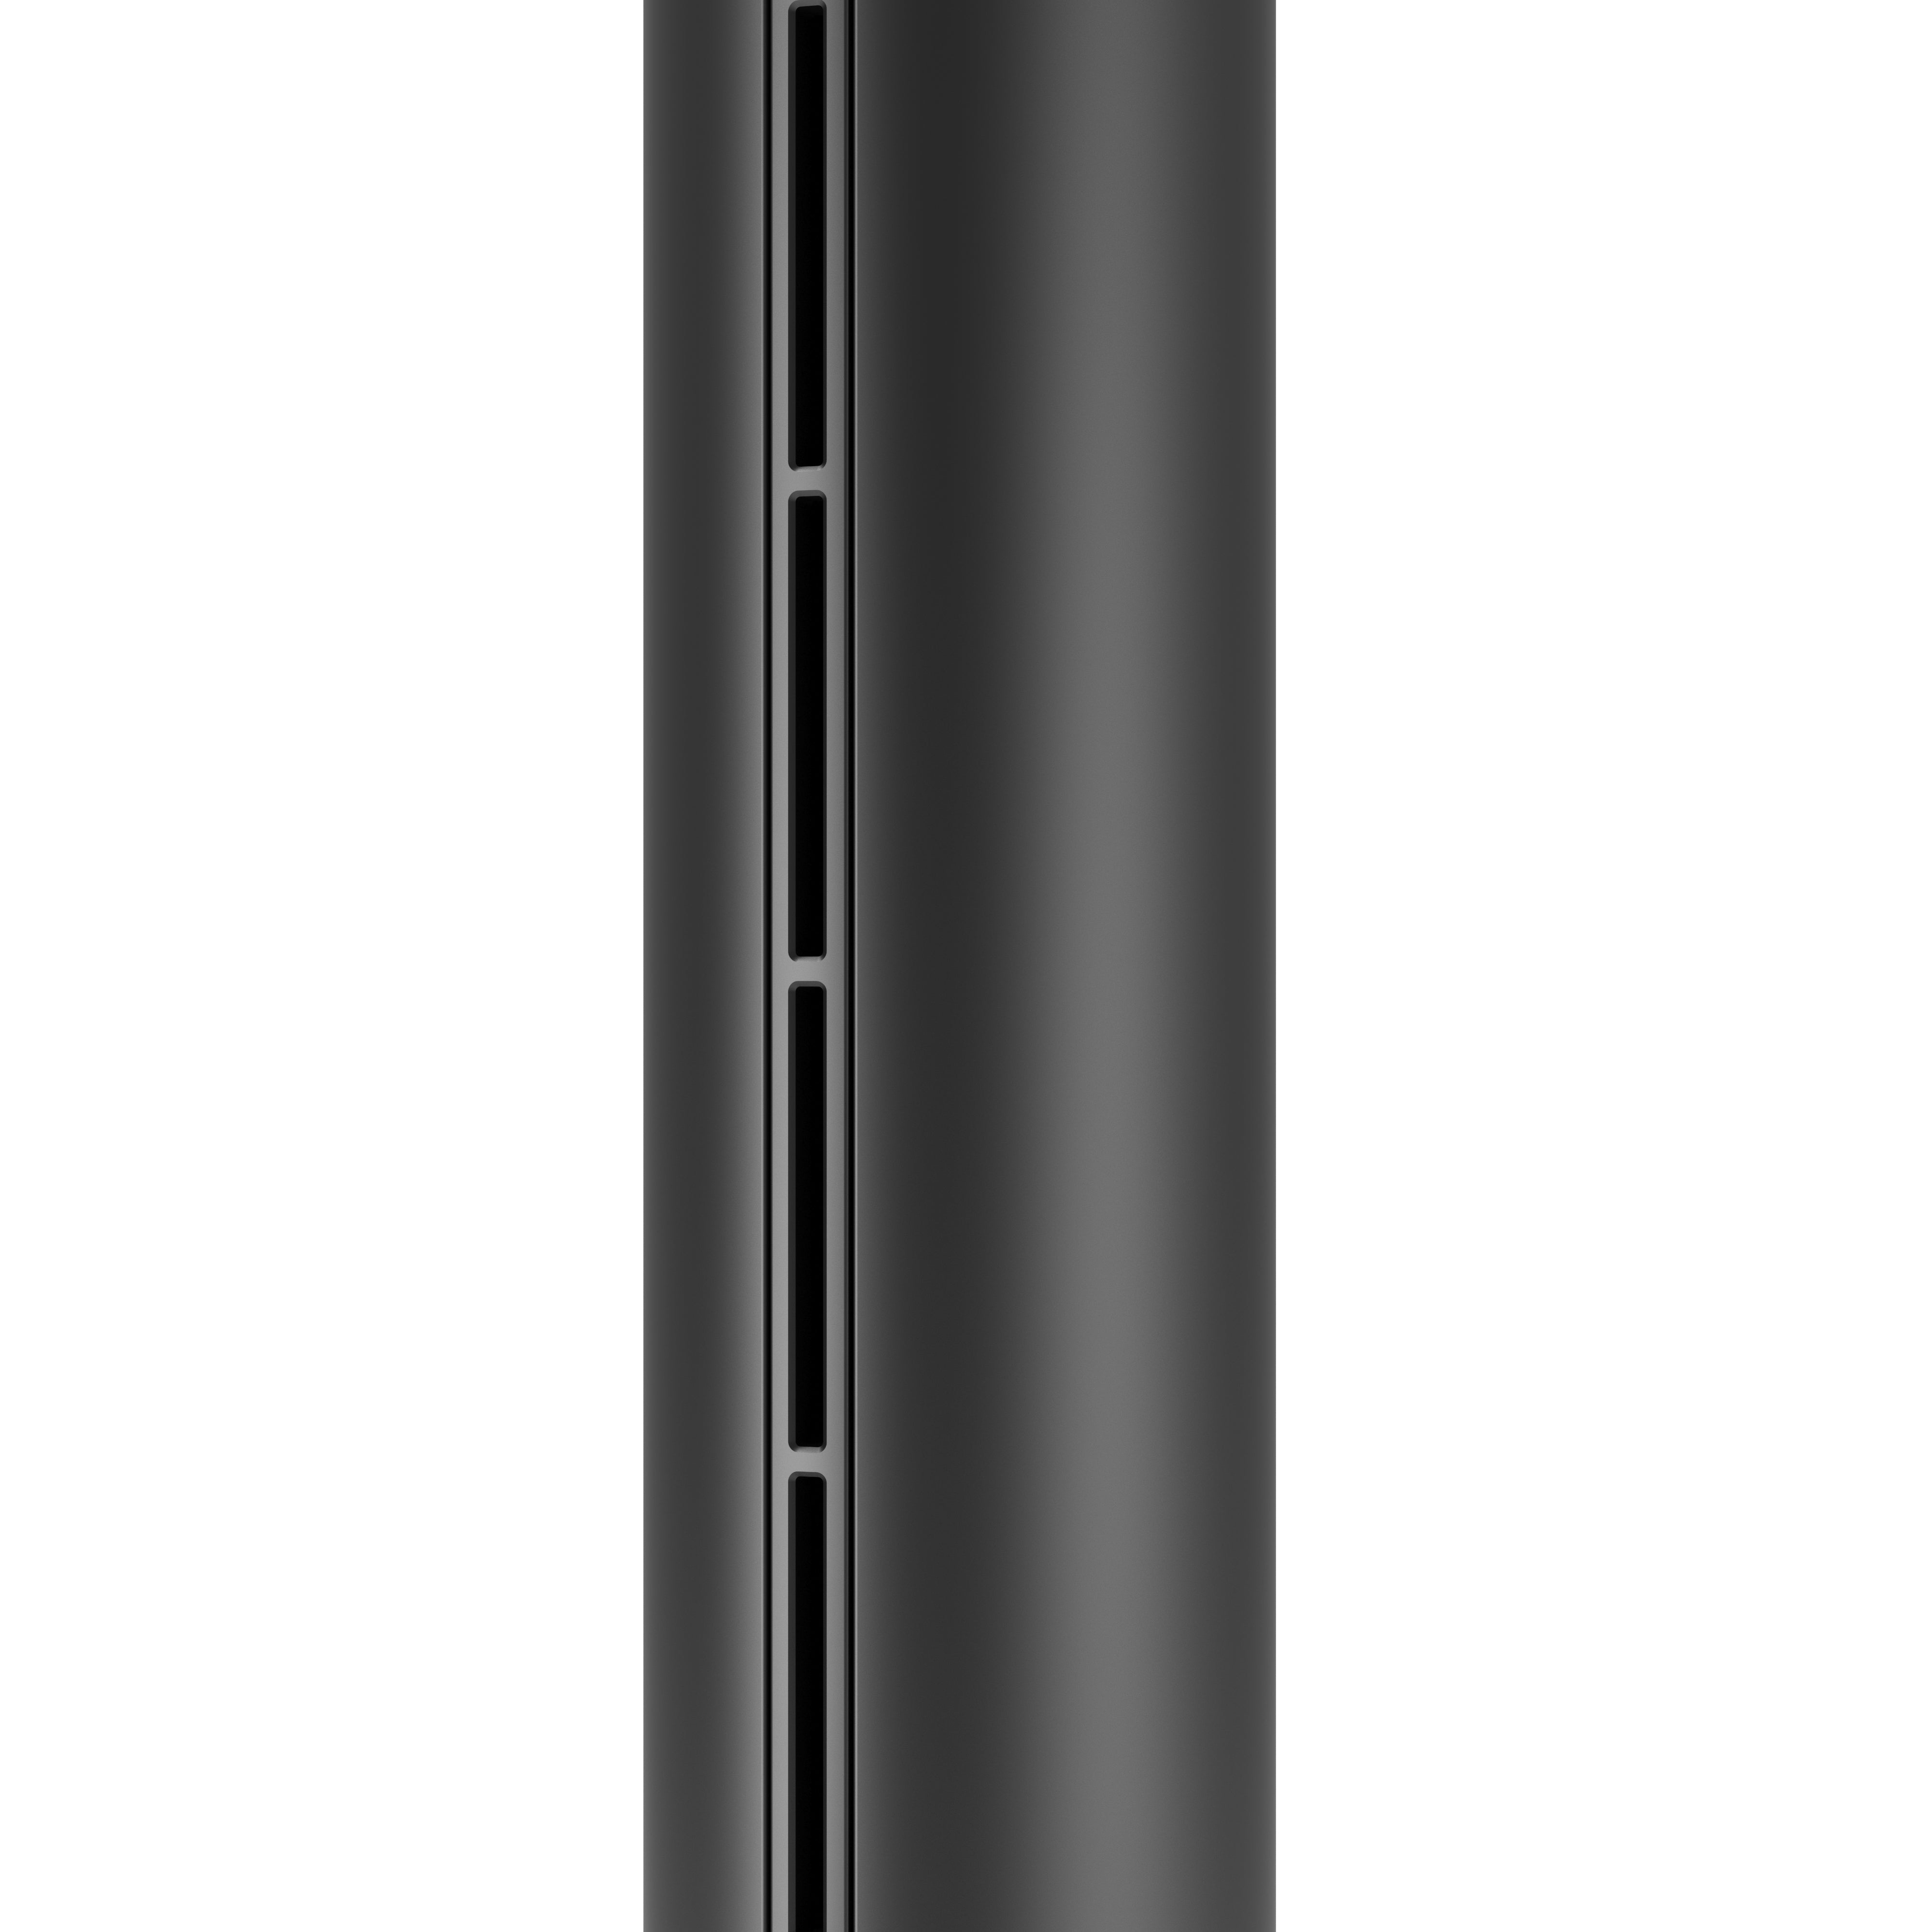 Olimpia Vertigo - 3 filtratiefasen, kiemdodende UV-lamp en supercompact torenontwerp